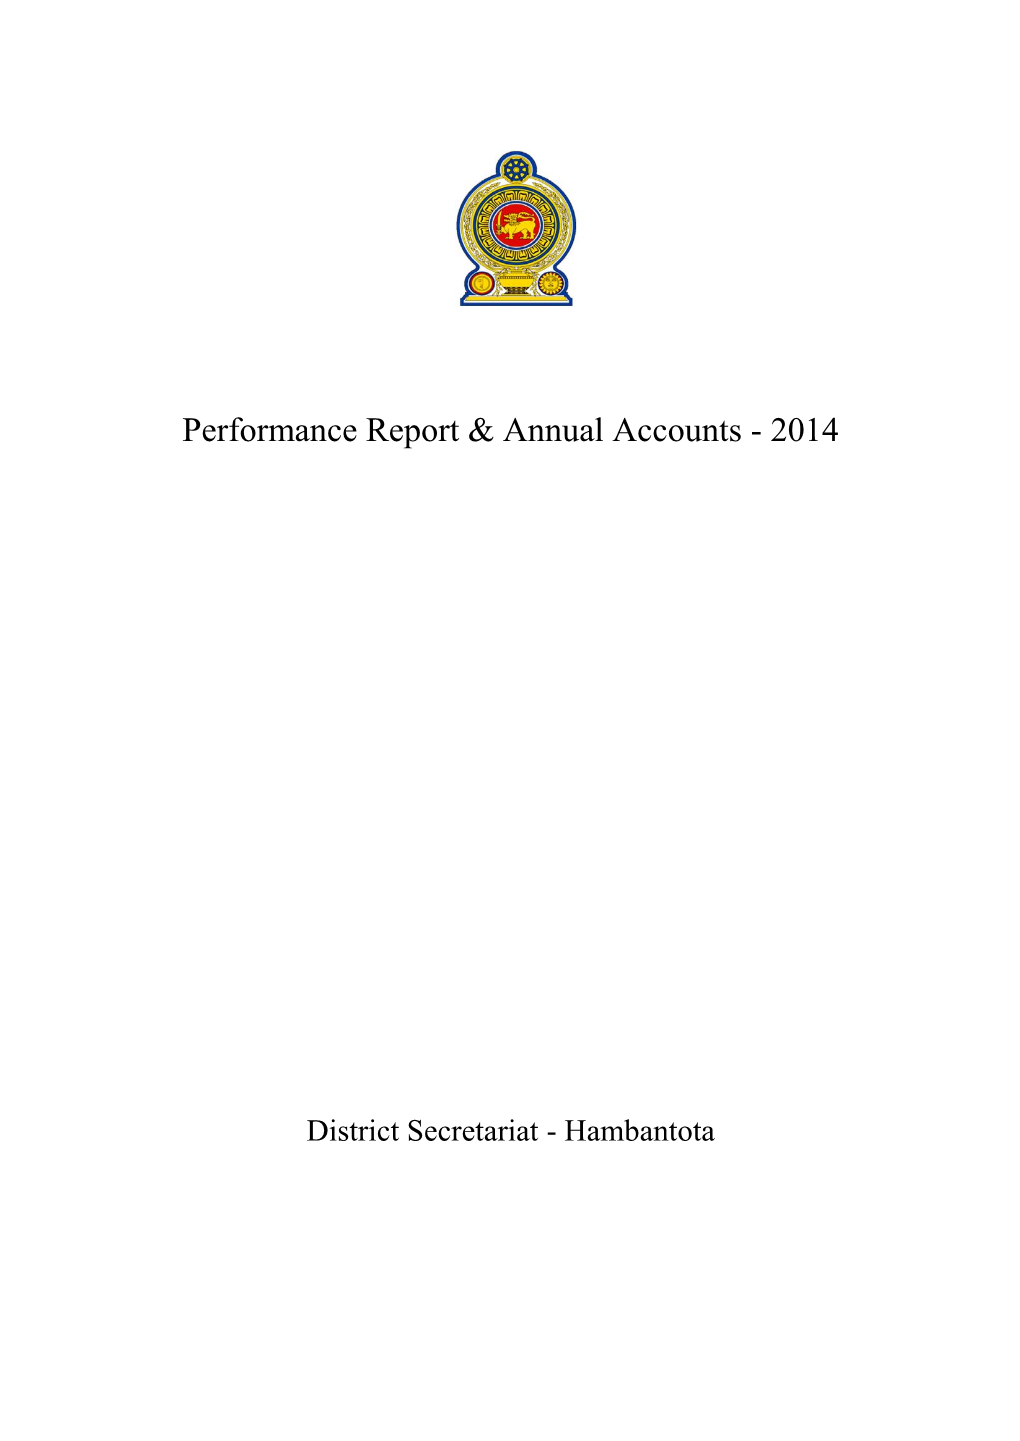 District Secretariat, Hambantota for the Year 2014